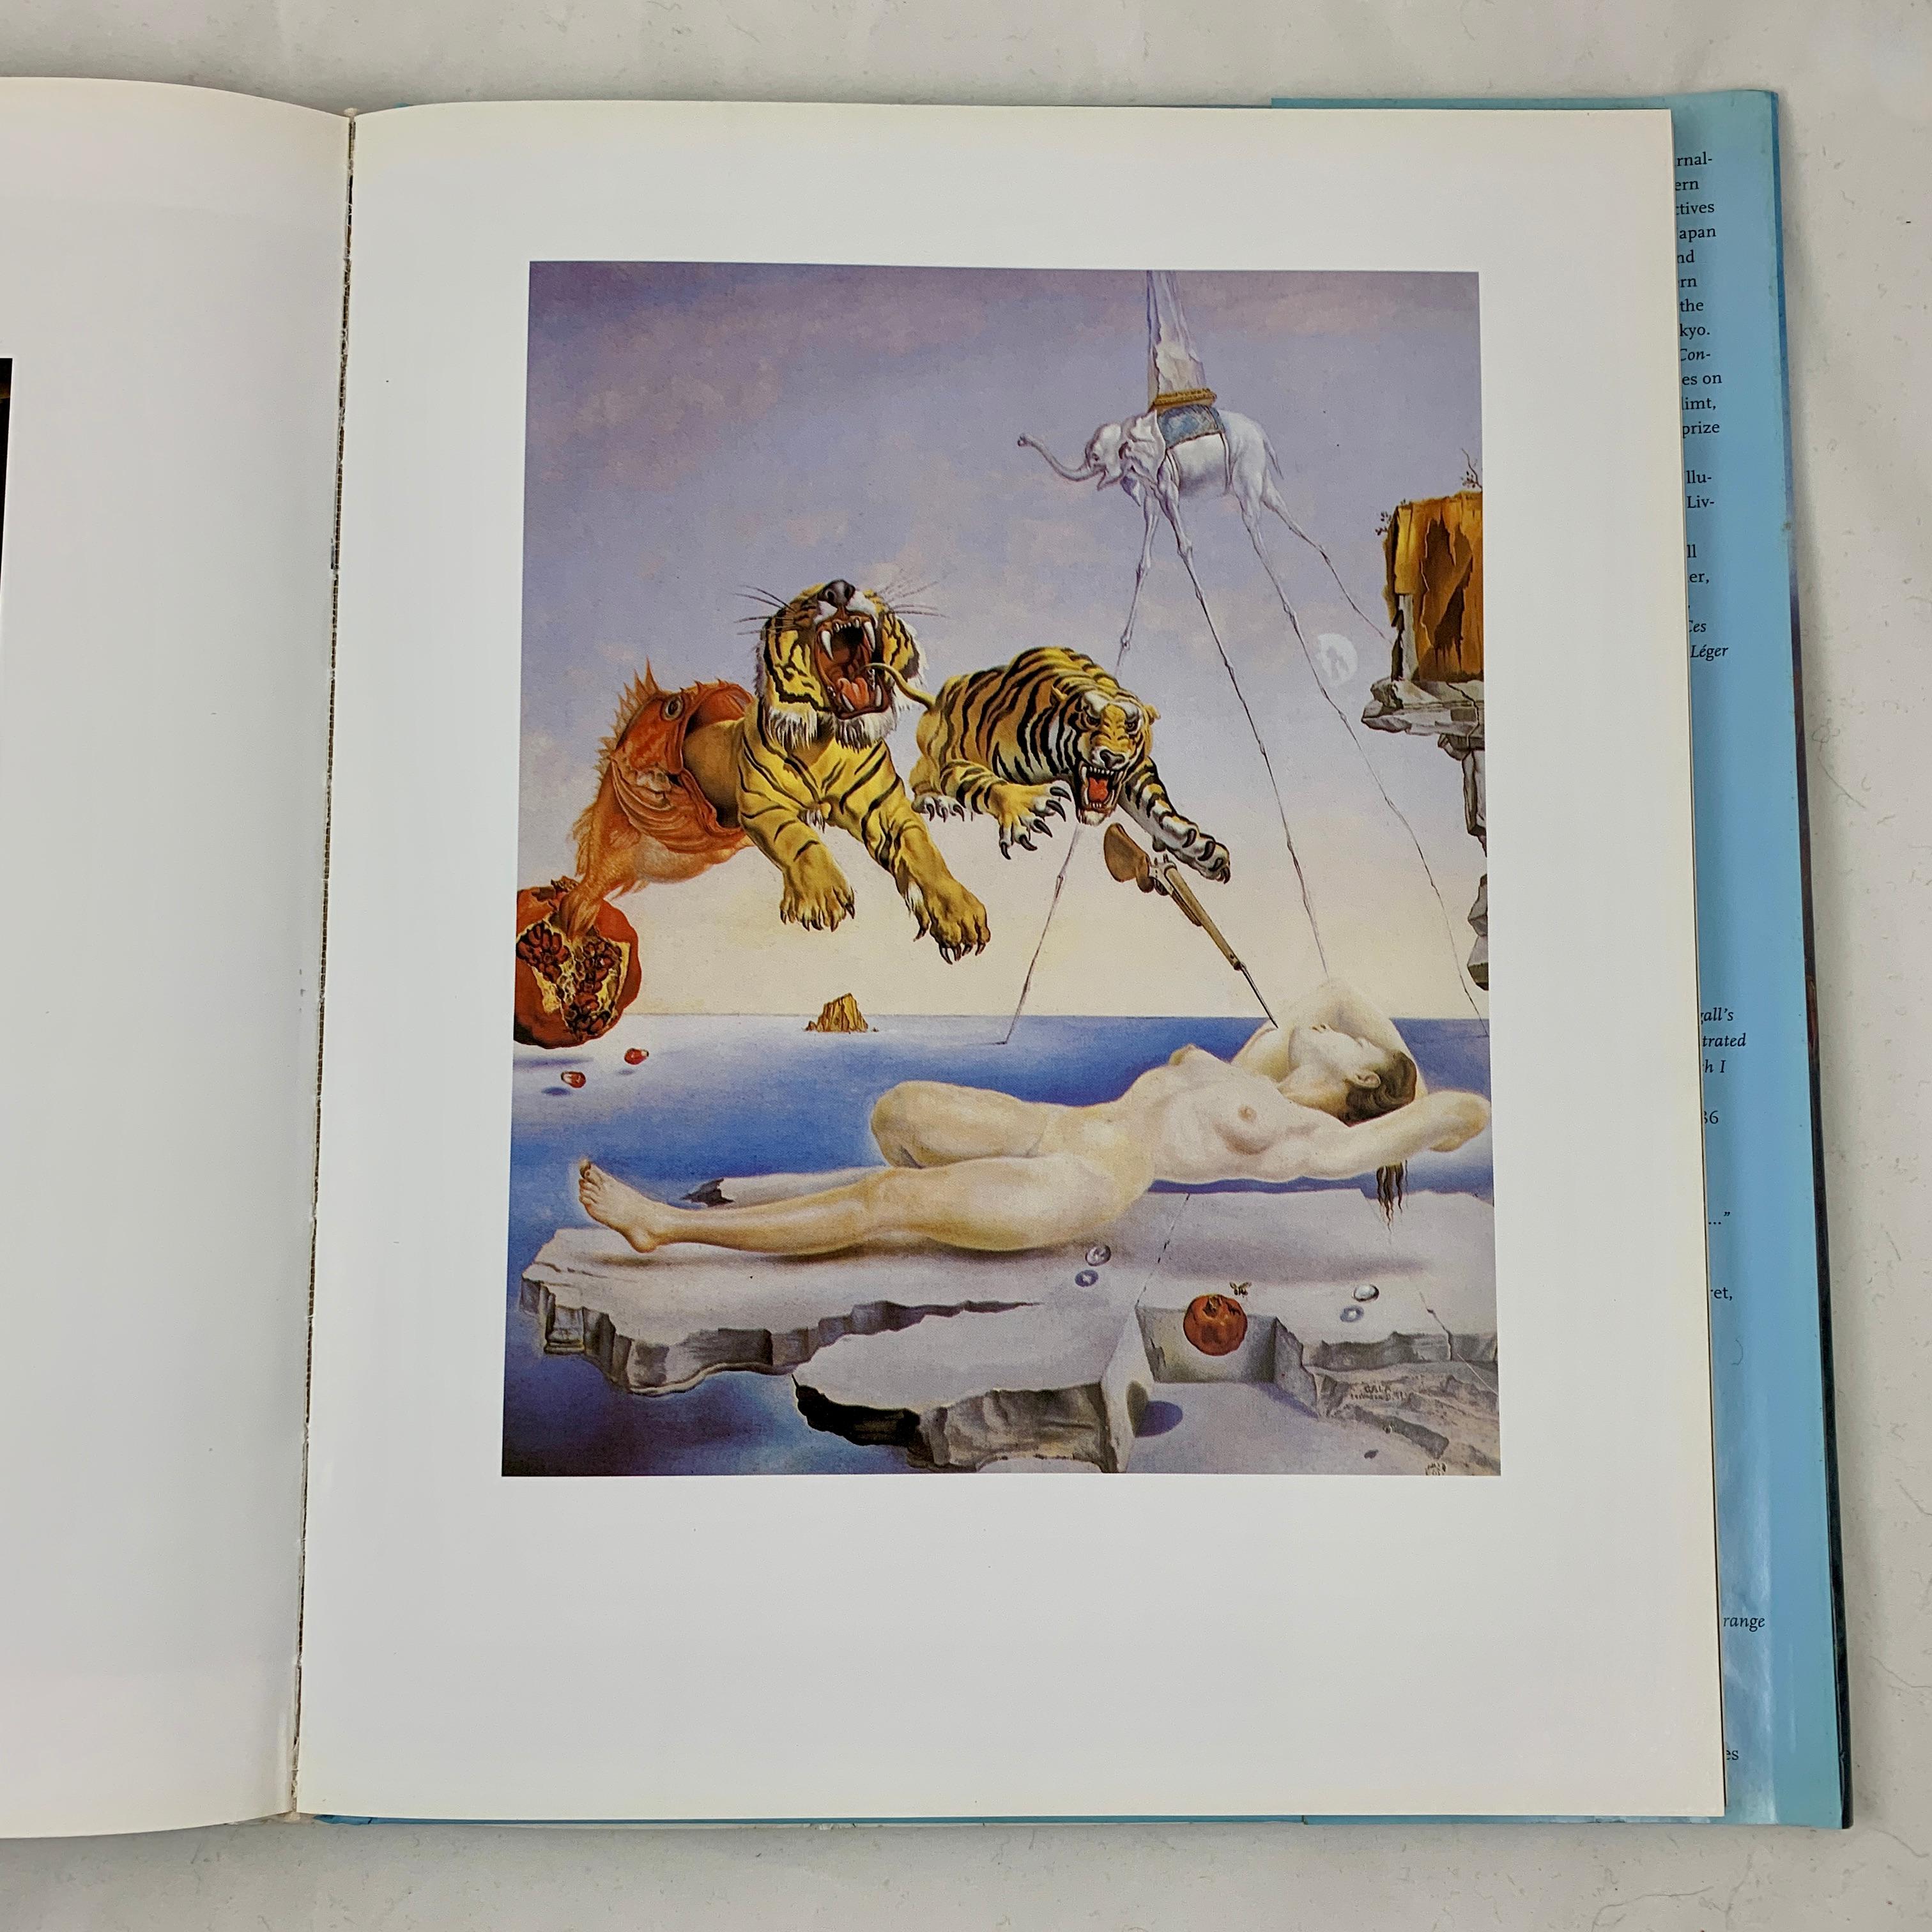 International Style Salvador Dalí Art Book by Robert Descharnes and Gilles Néret, Taschen Press For Sale